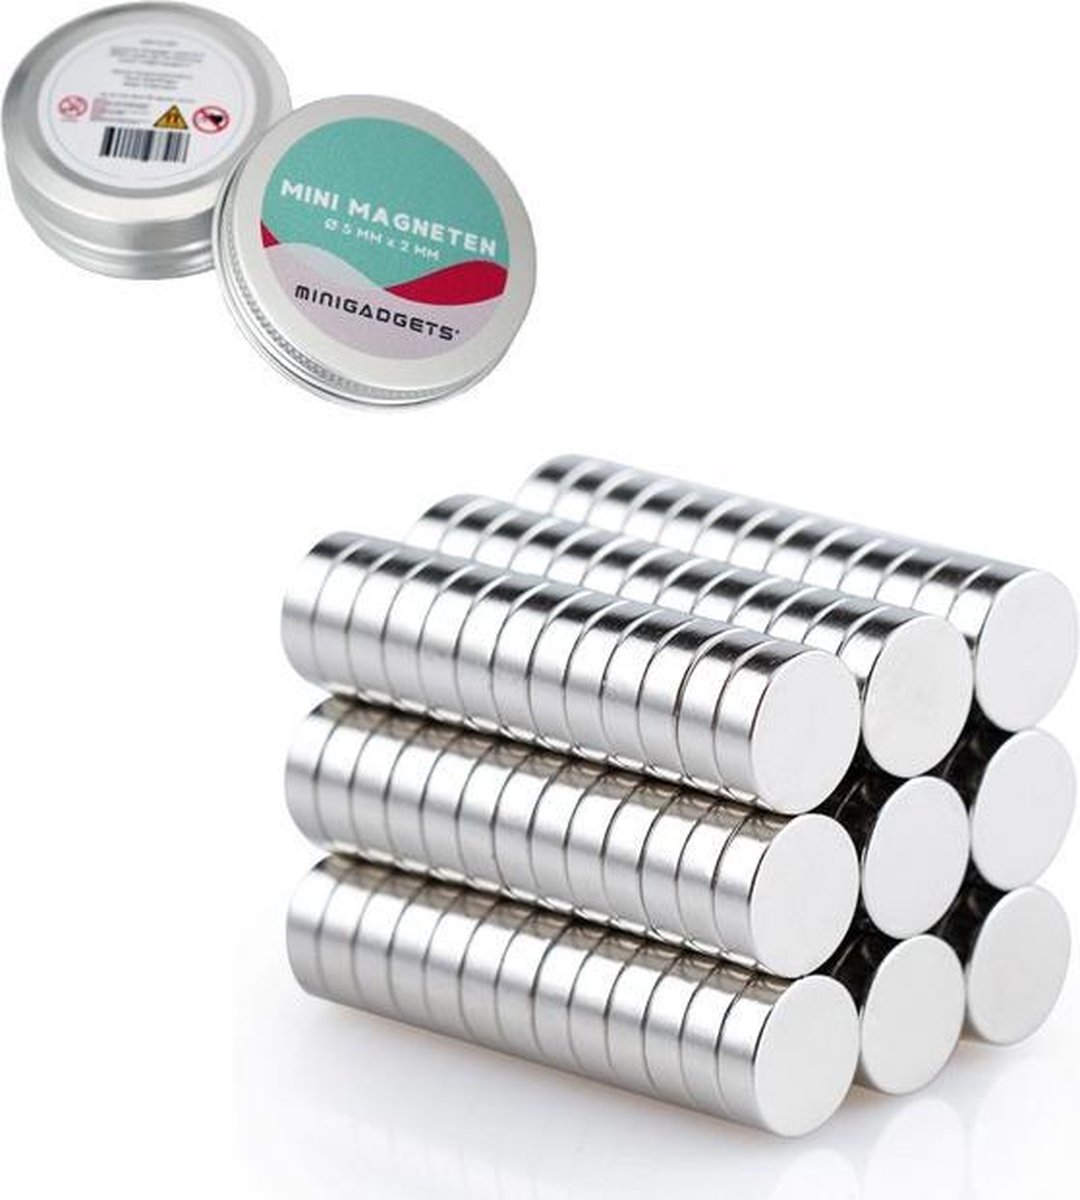 Super sterke magneten - 5 x 2 mm (50-stuks) - Rond - Neodymium - Koelkast magneten - Whiteboard magneten - Klein - Ronde - 5x2mm - Minigadgets